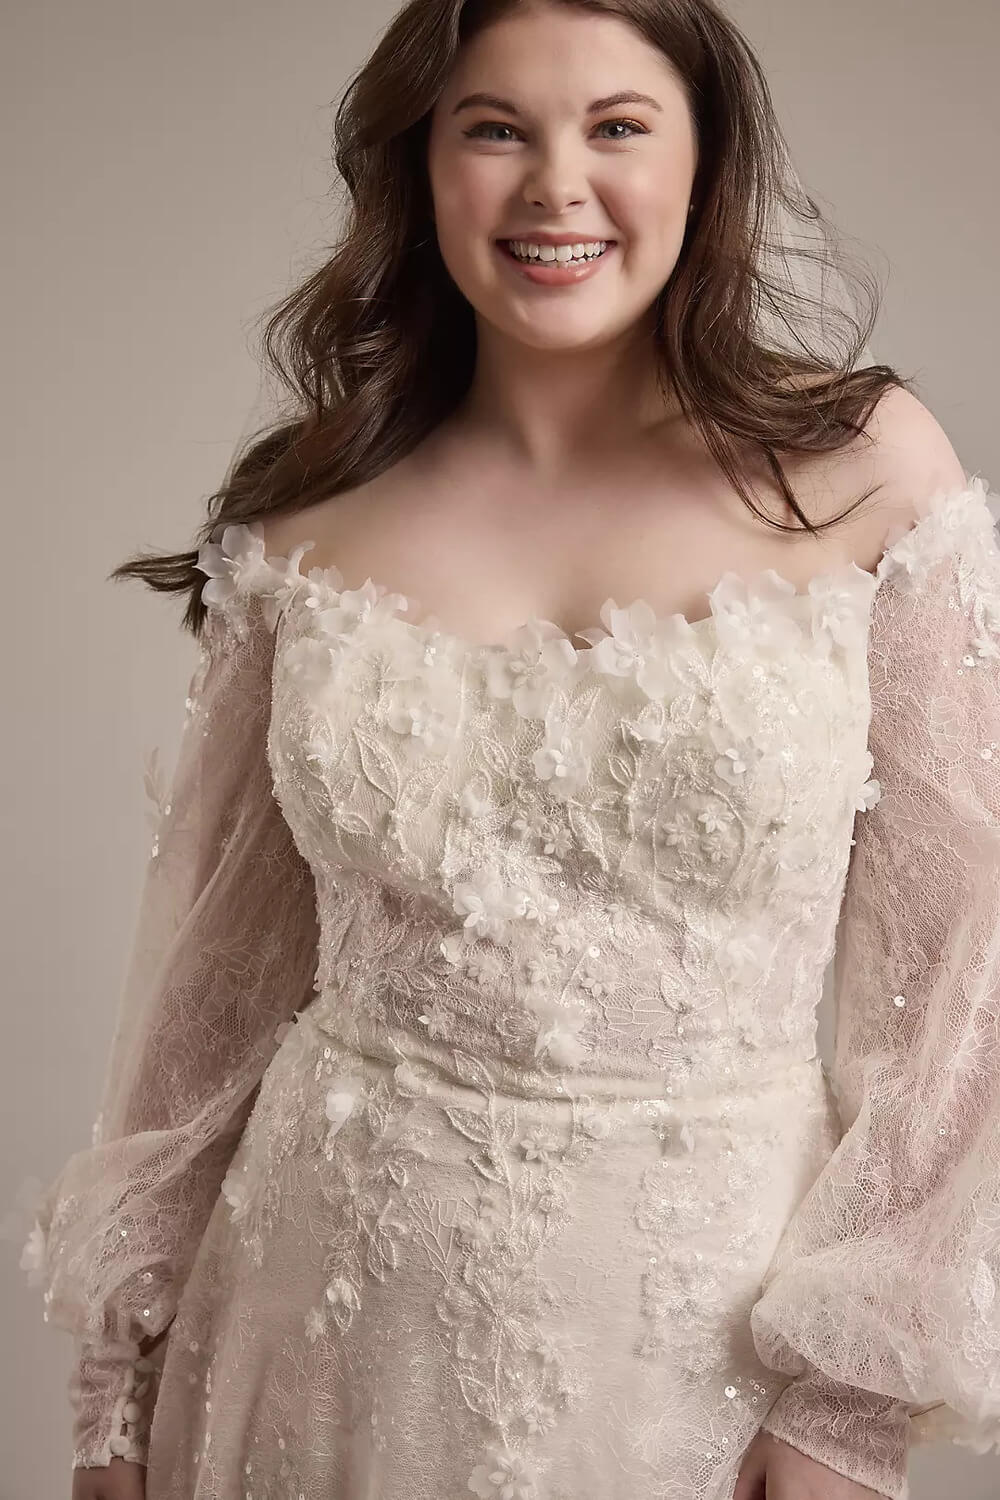 Plus Size Wedding Dresses Online Long Sleeve Off the Shoulder Wedding Dress Melissa Sweet